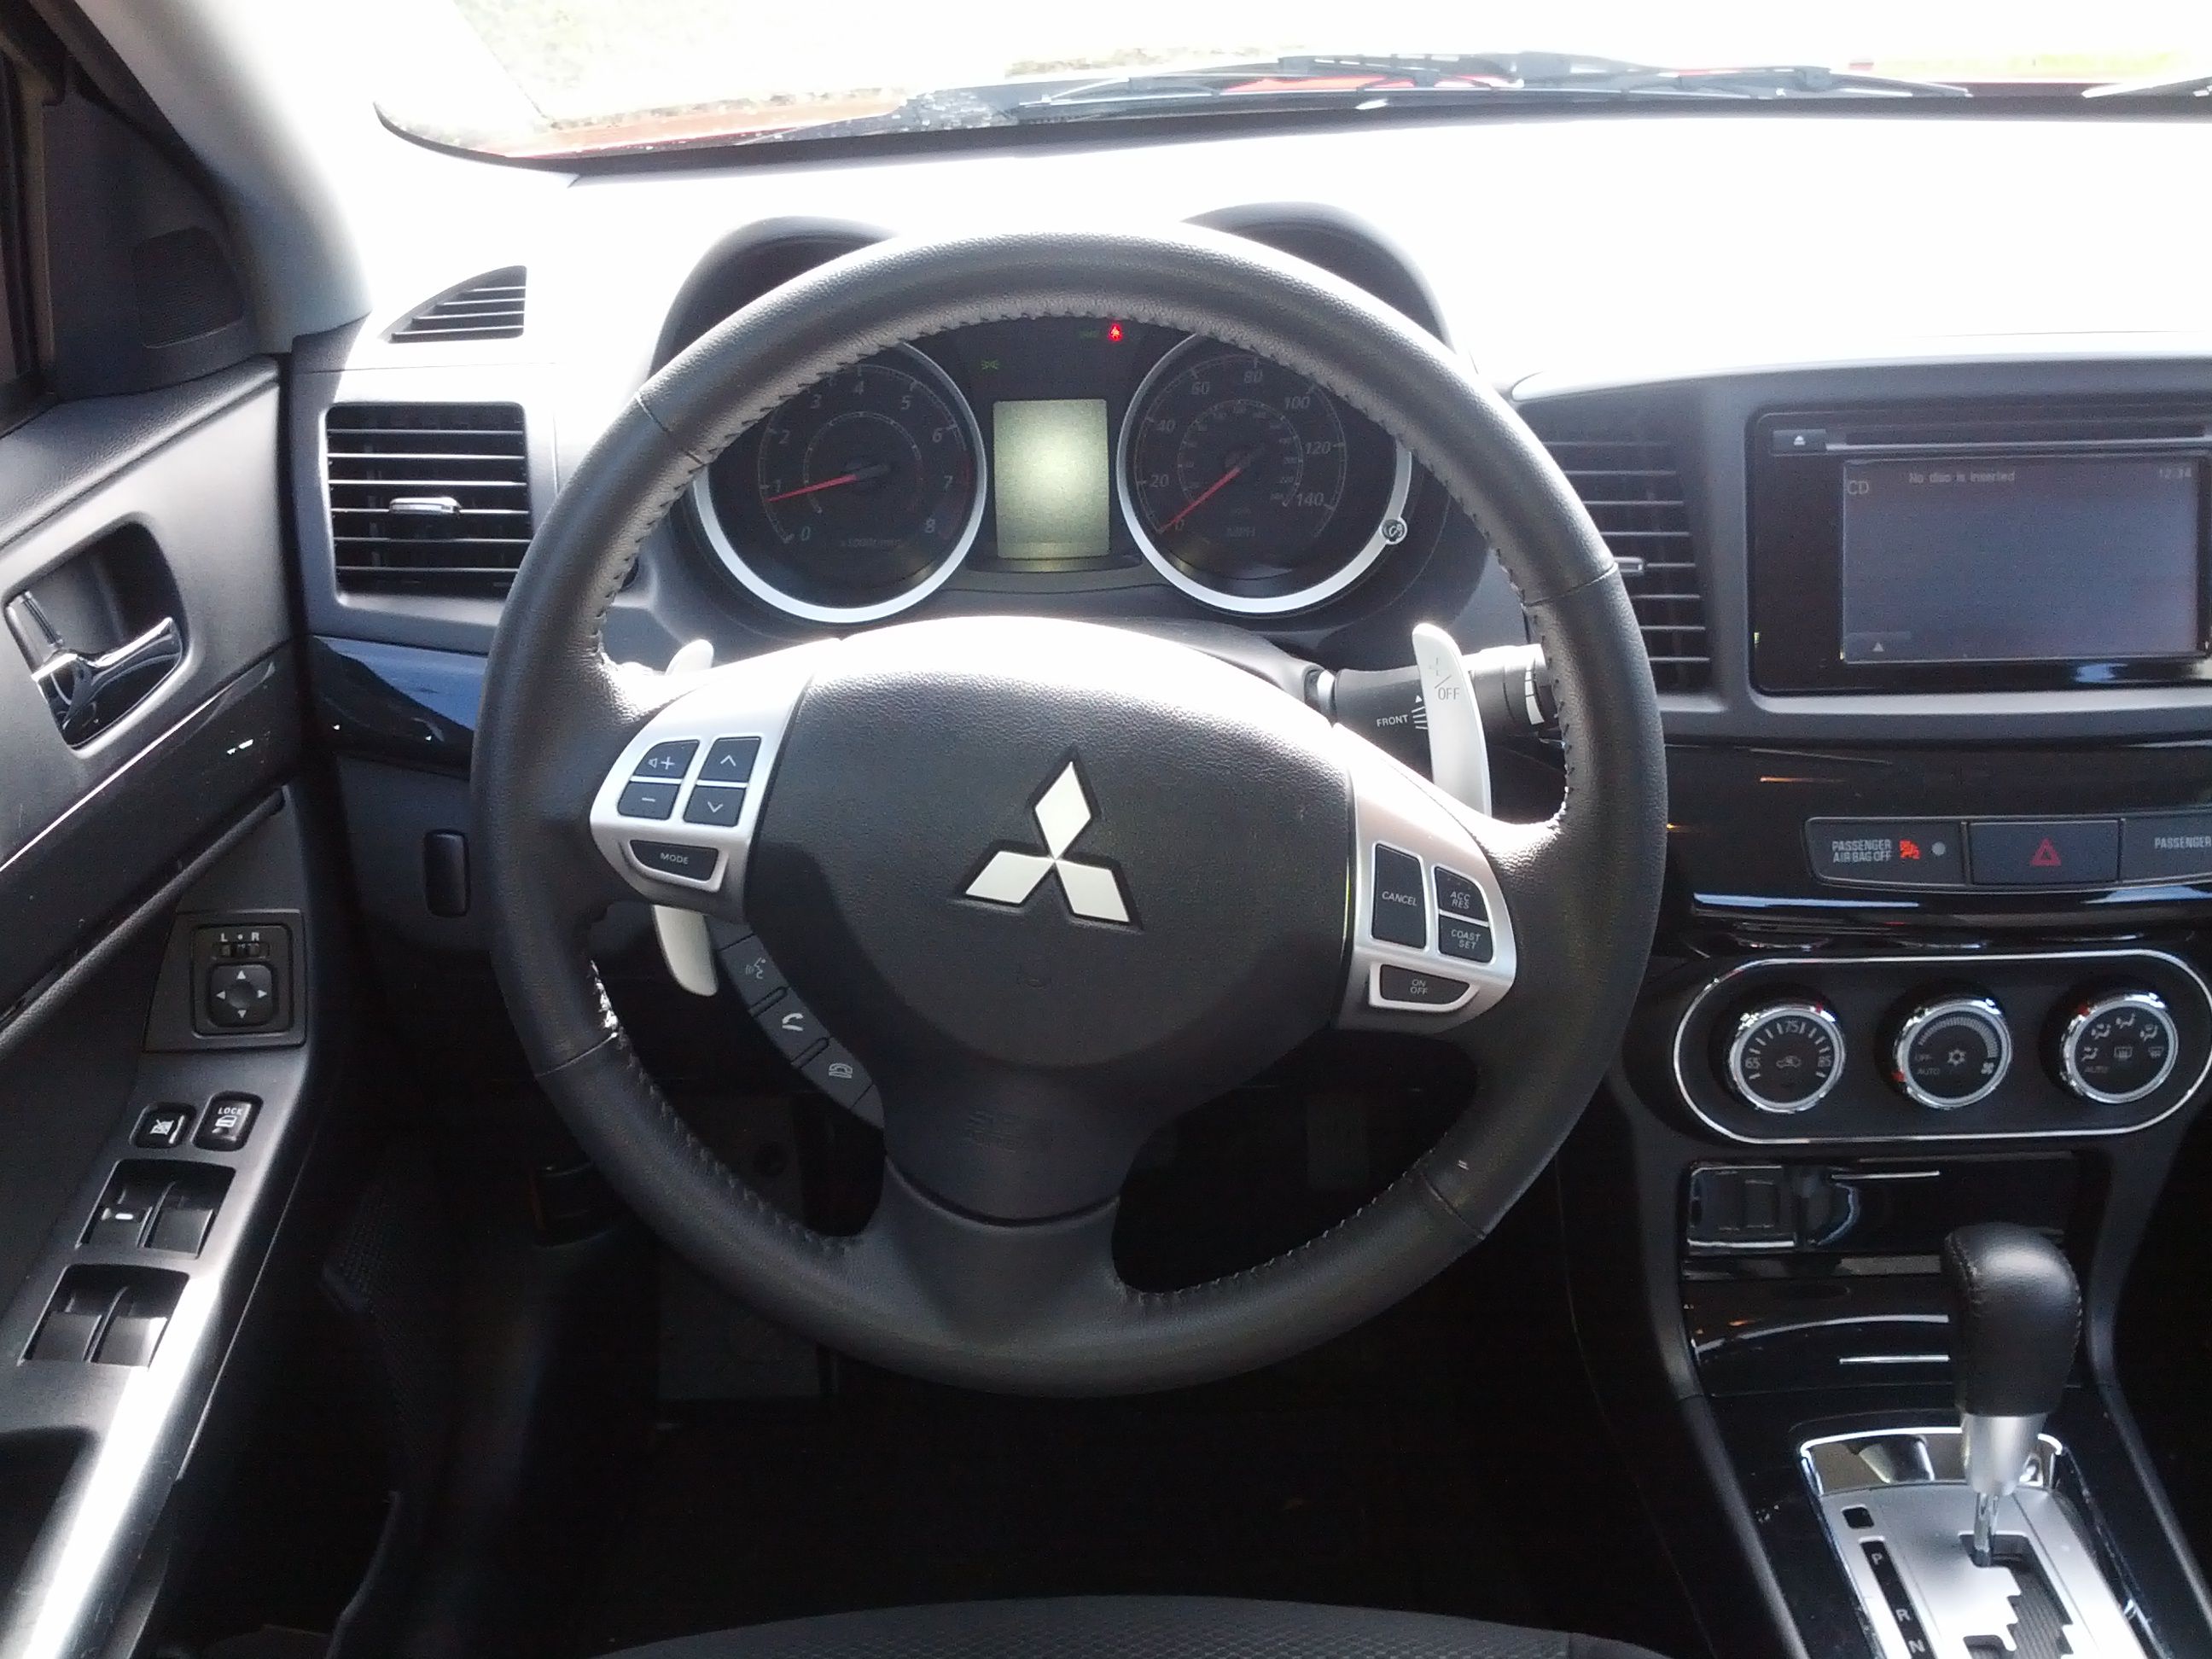 2014 Mitsubishi Lancer GT - Driven